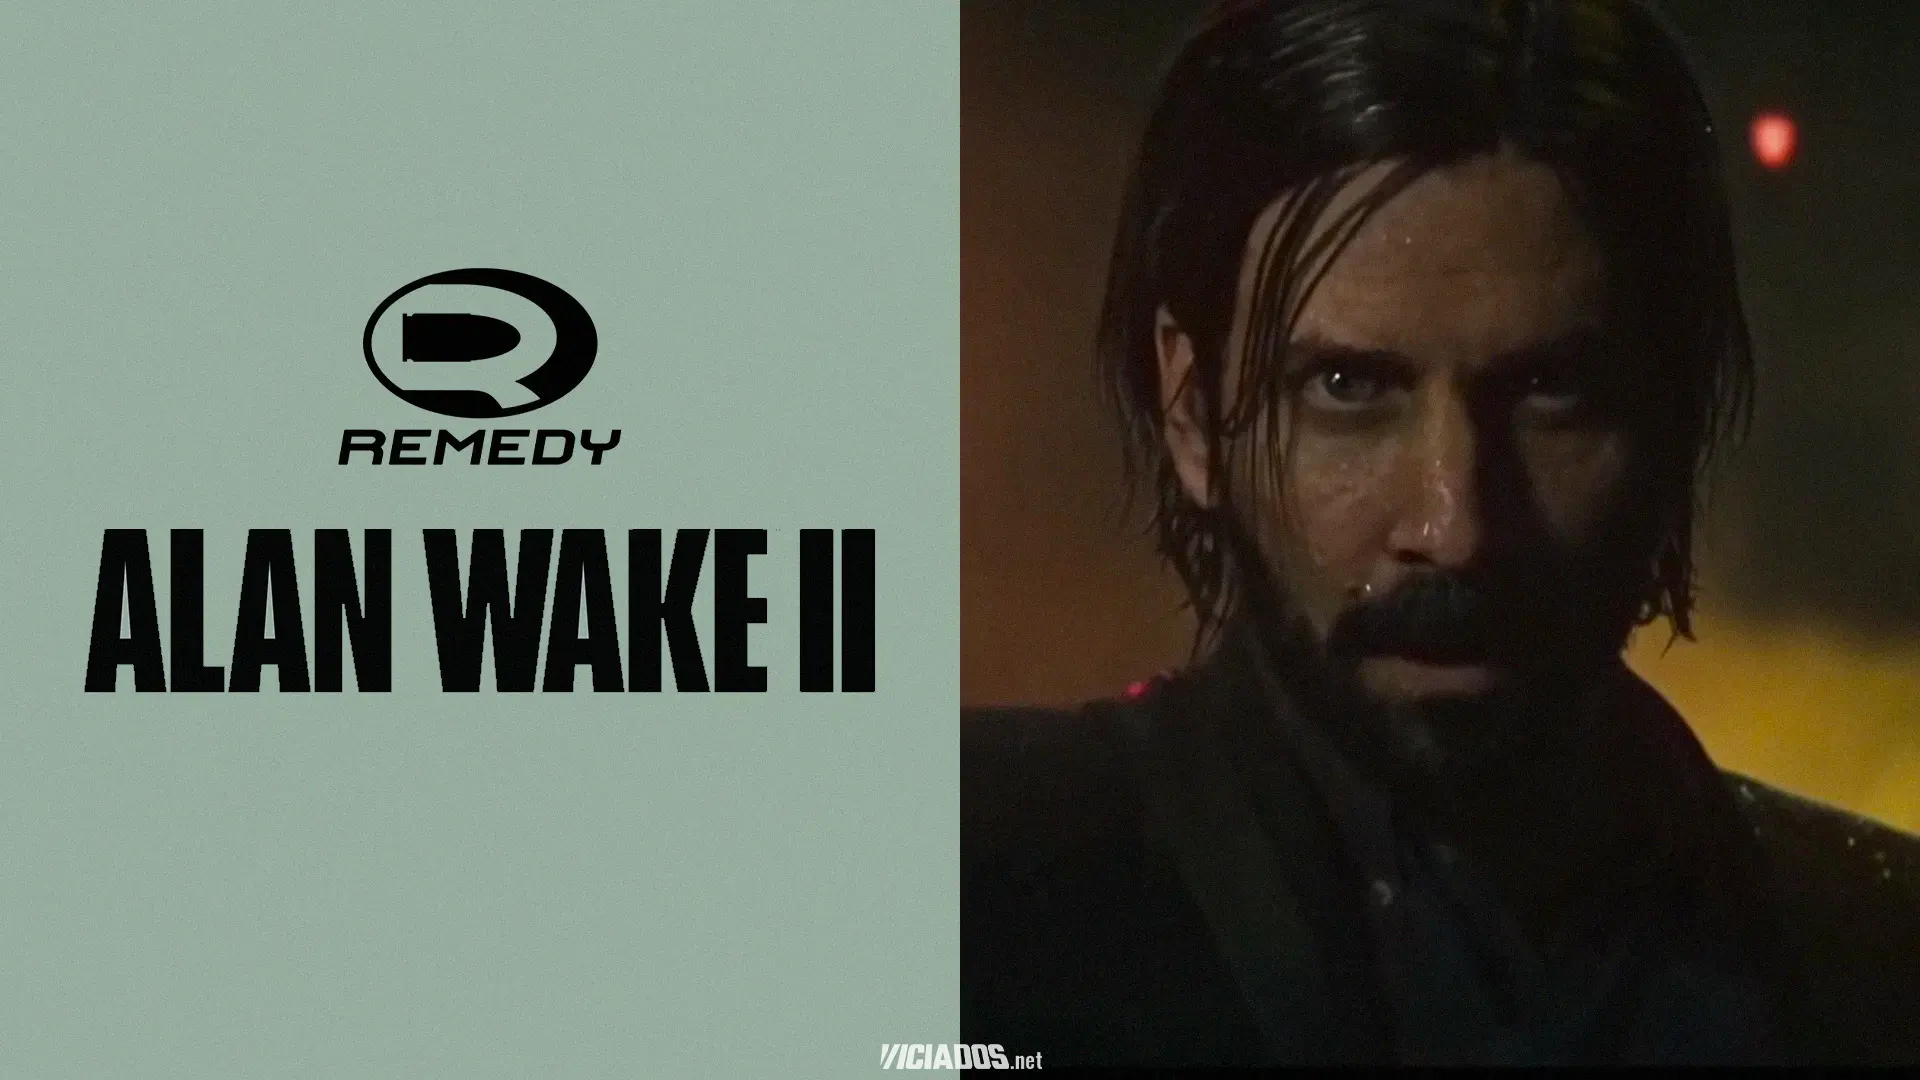 Alan Wake 2 | Remedy revela mais novidades sobre o novo título 2023 Viciados